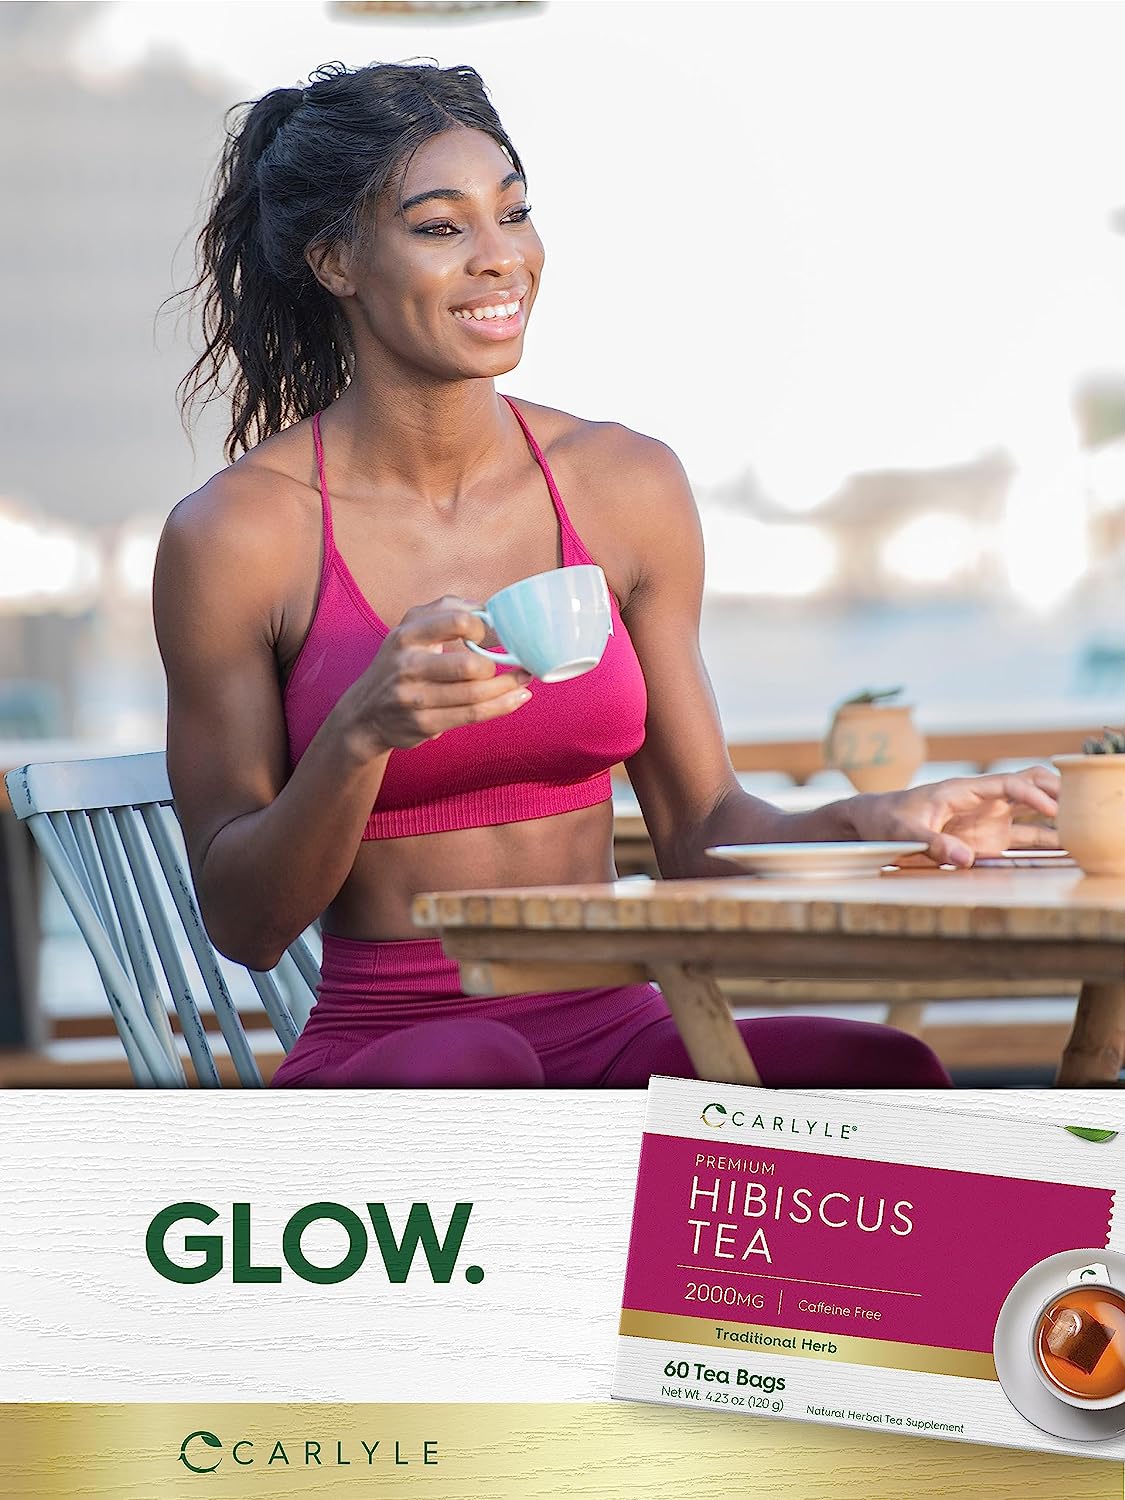 Hibiscus Tea Bags | Caffeine Free | 60 Count